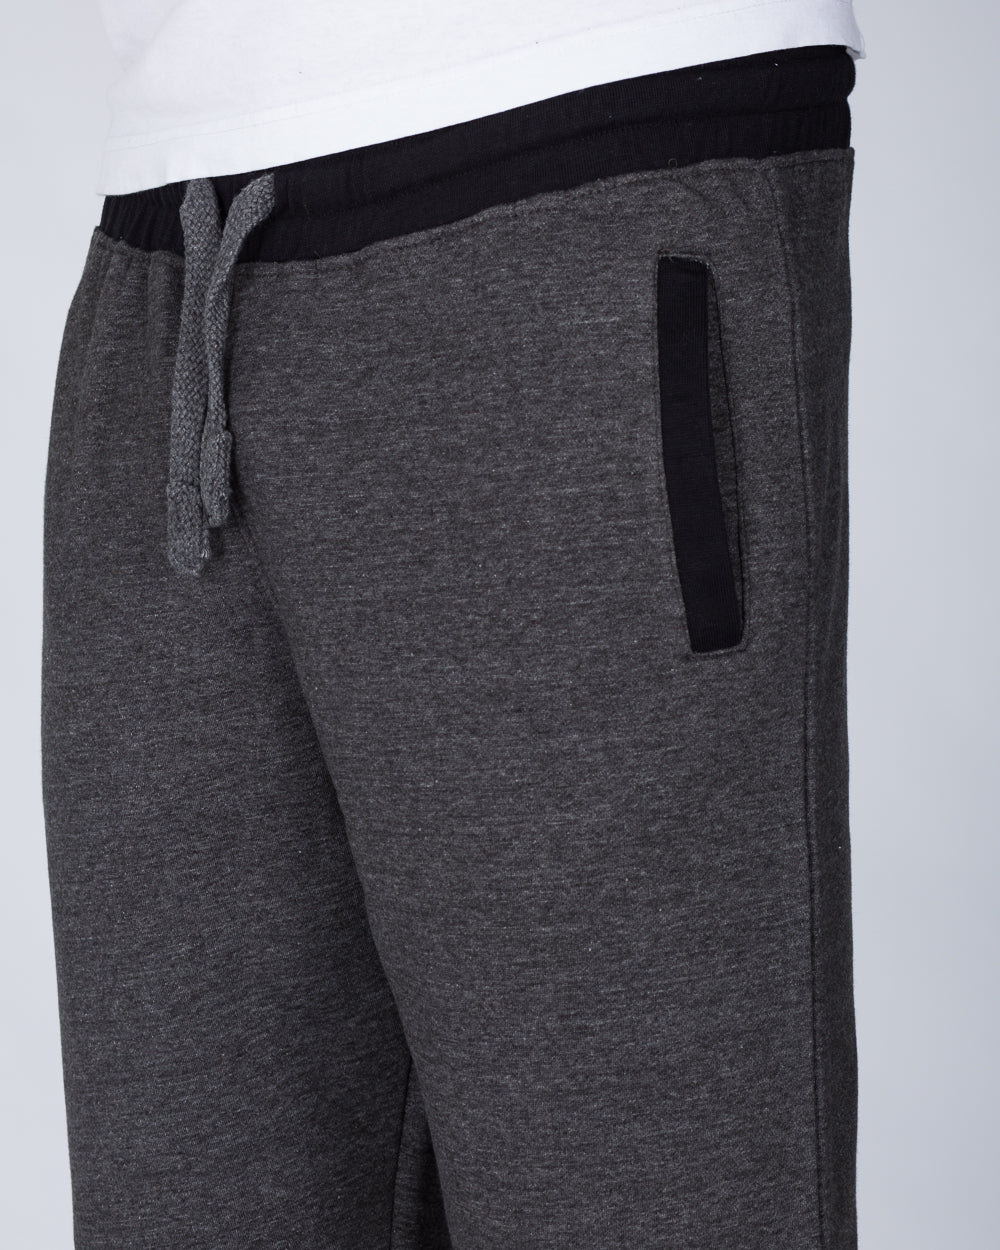 2t Tall Sweat Shorts (charcoal)